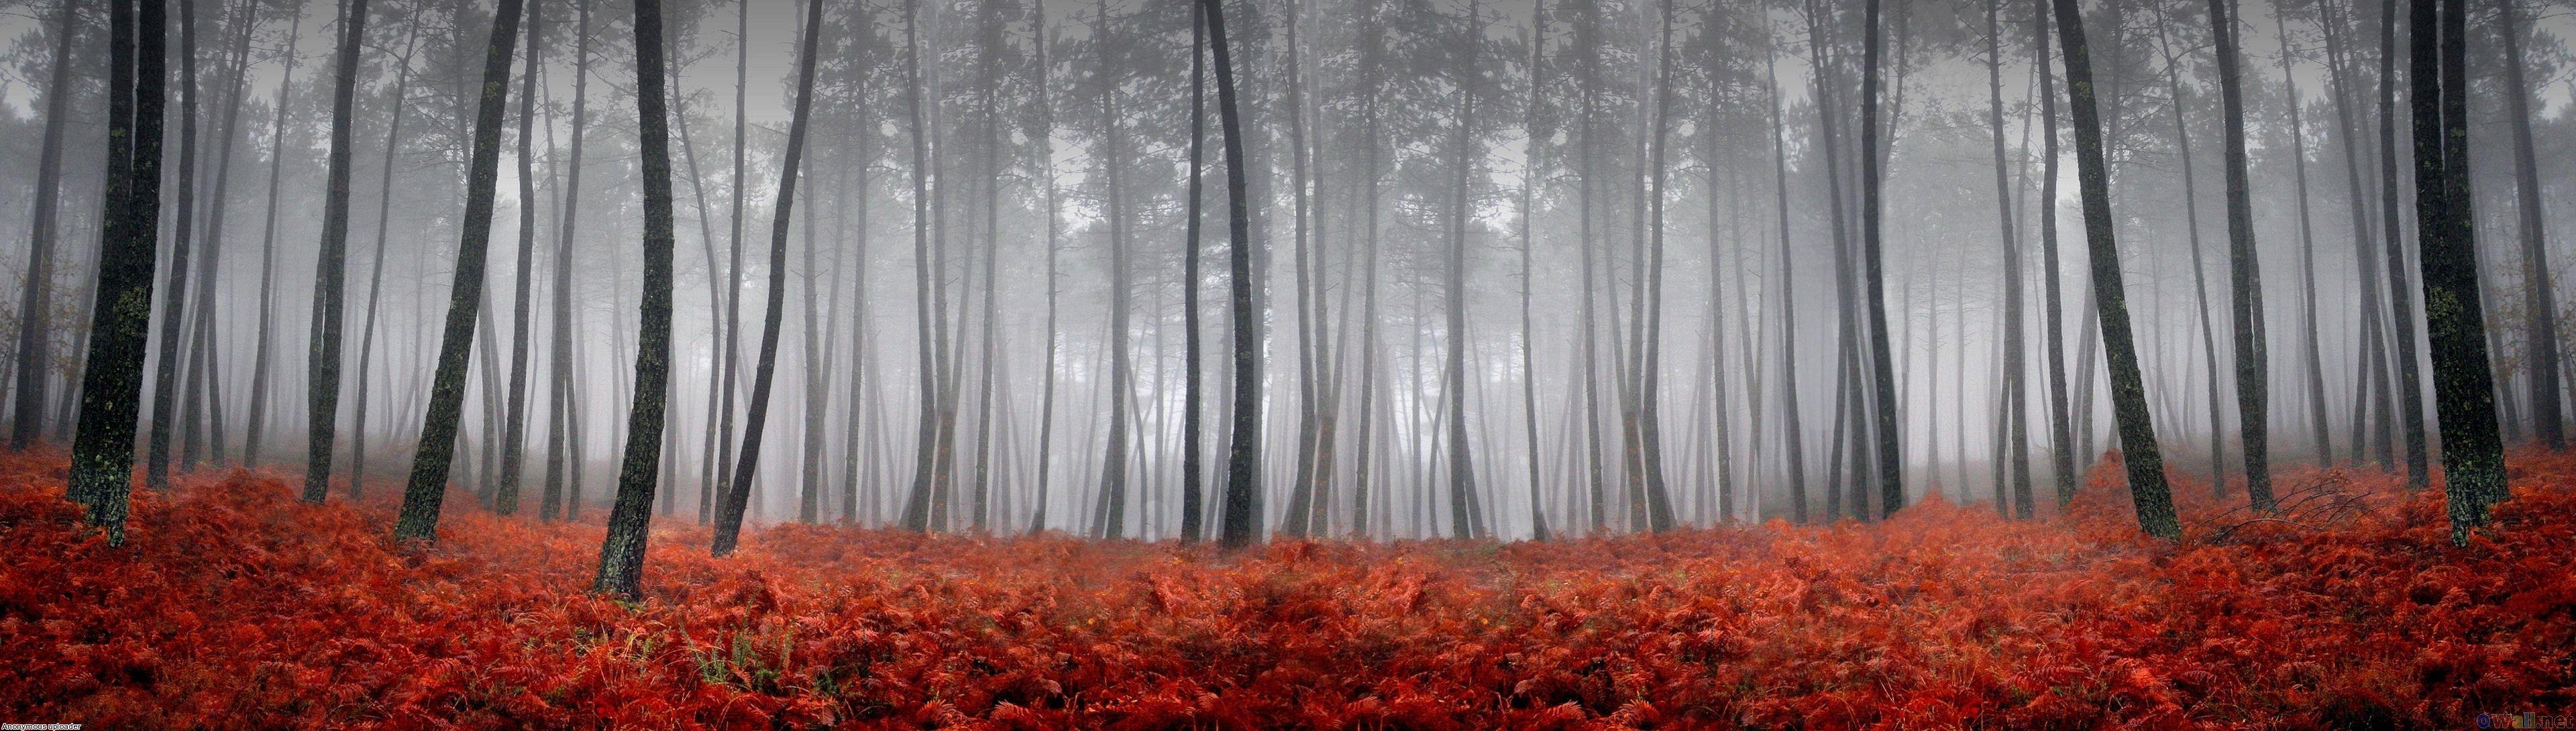 Red forest in a wonderful Autumn season  HD wallpaper